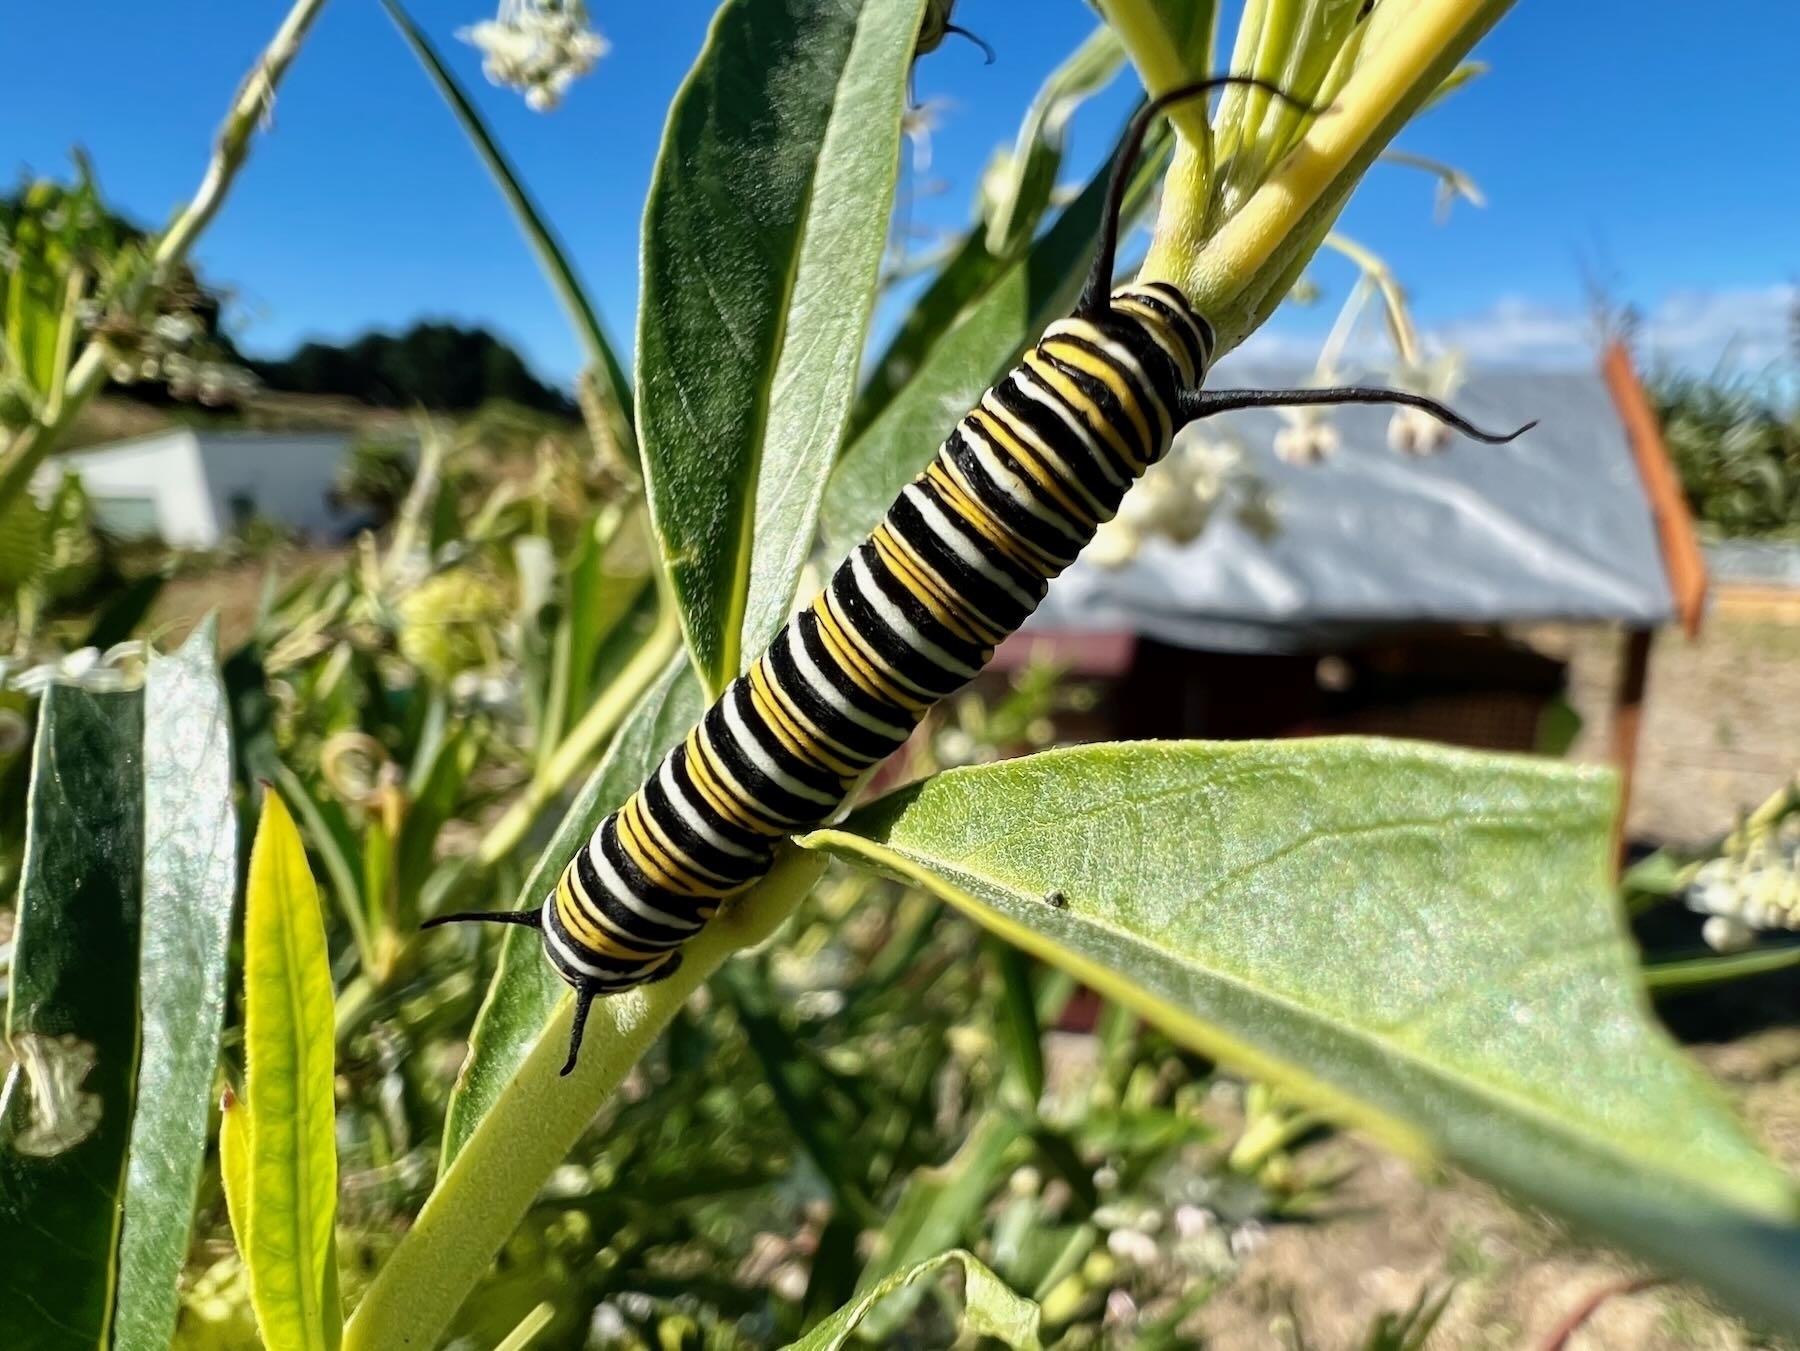 Big fat Monarch caterpillar. 